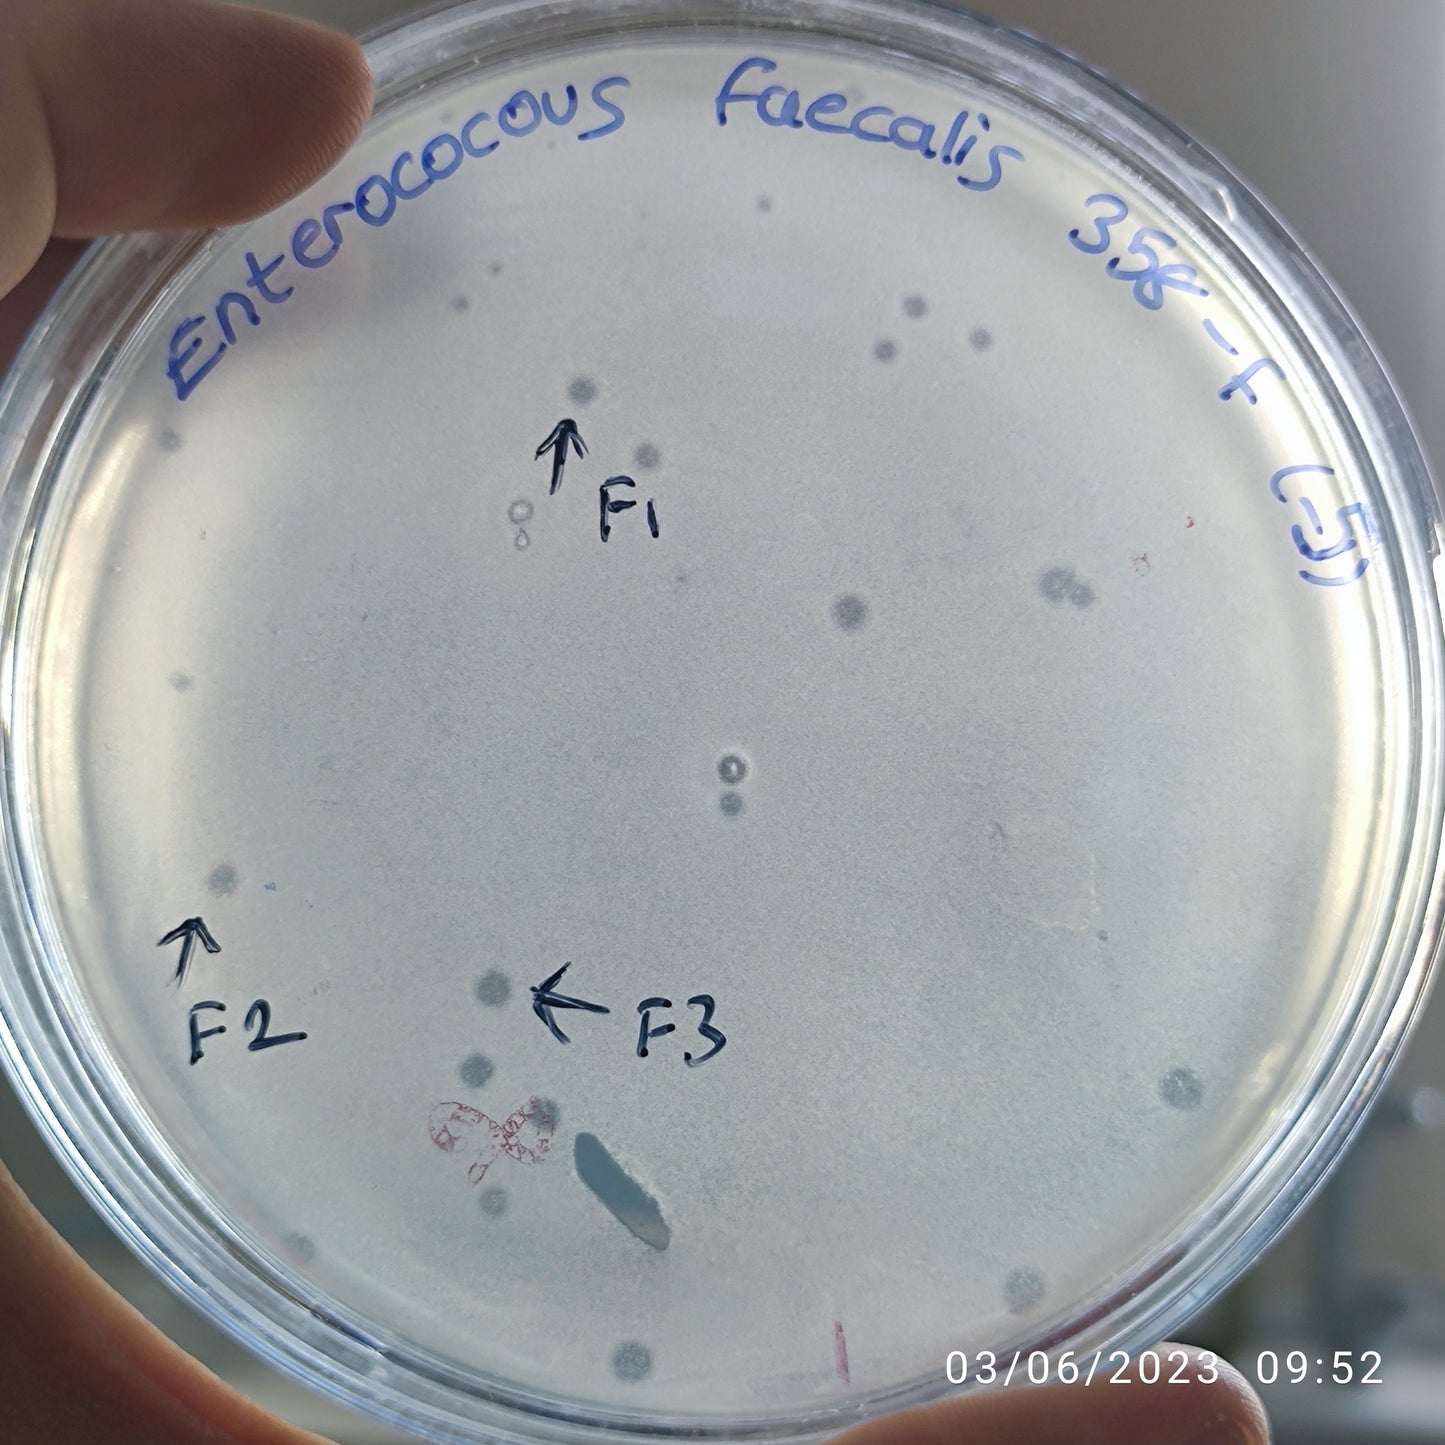 Enterococcus faecalis bacteriophage 110358F